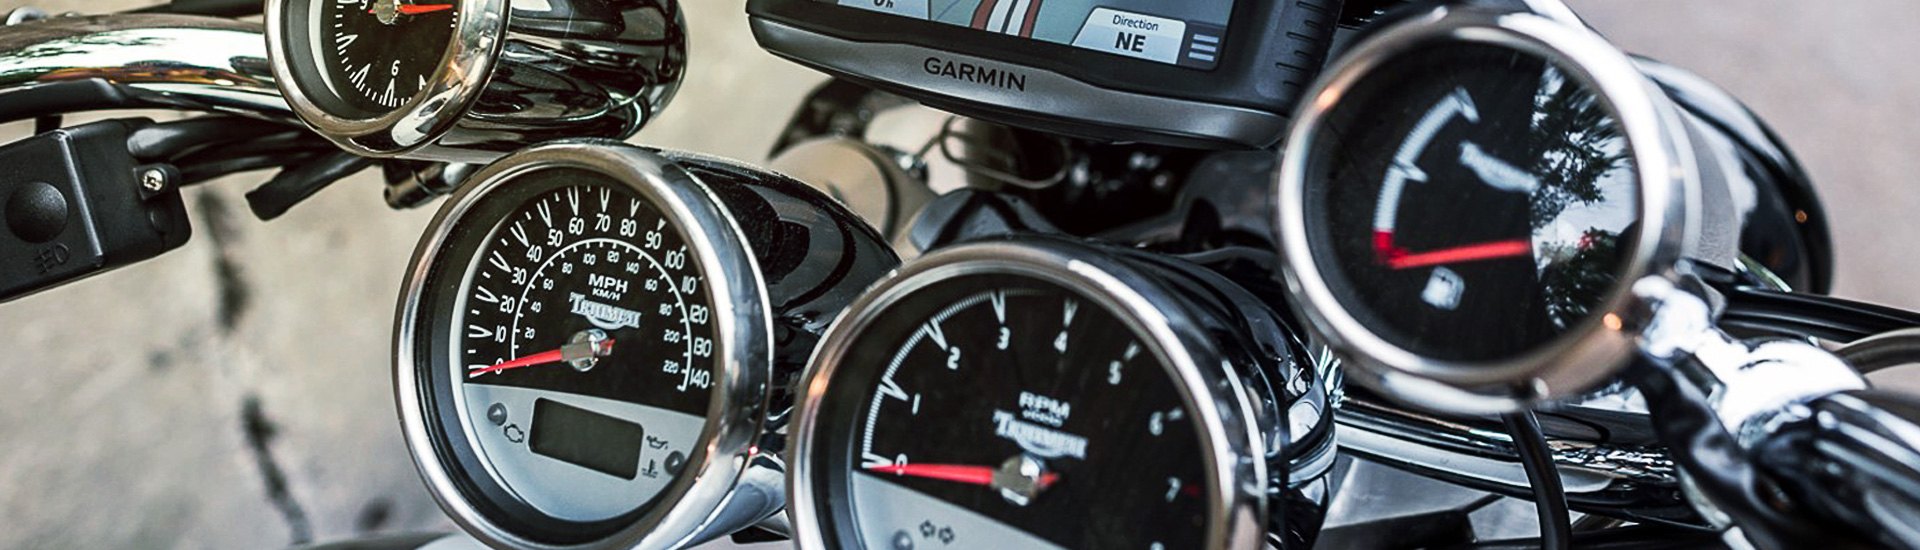 Motorcycle Gauge Dual Odometer Speedometer Speedo LED for Yamaha Suzuki Kawasaki